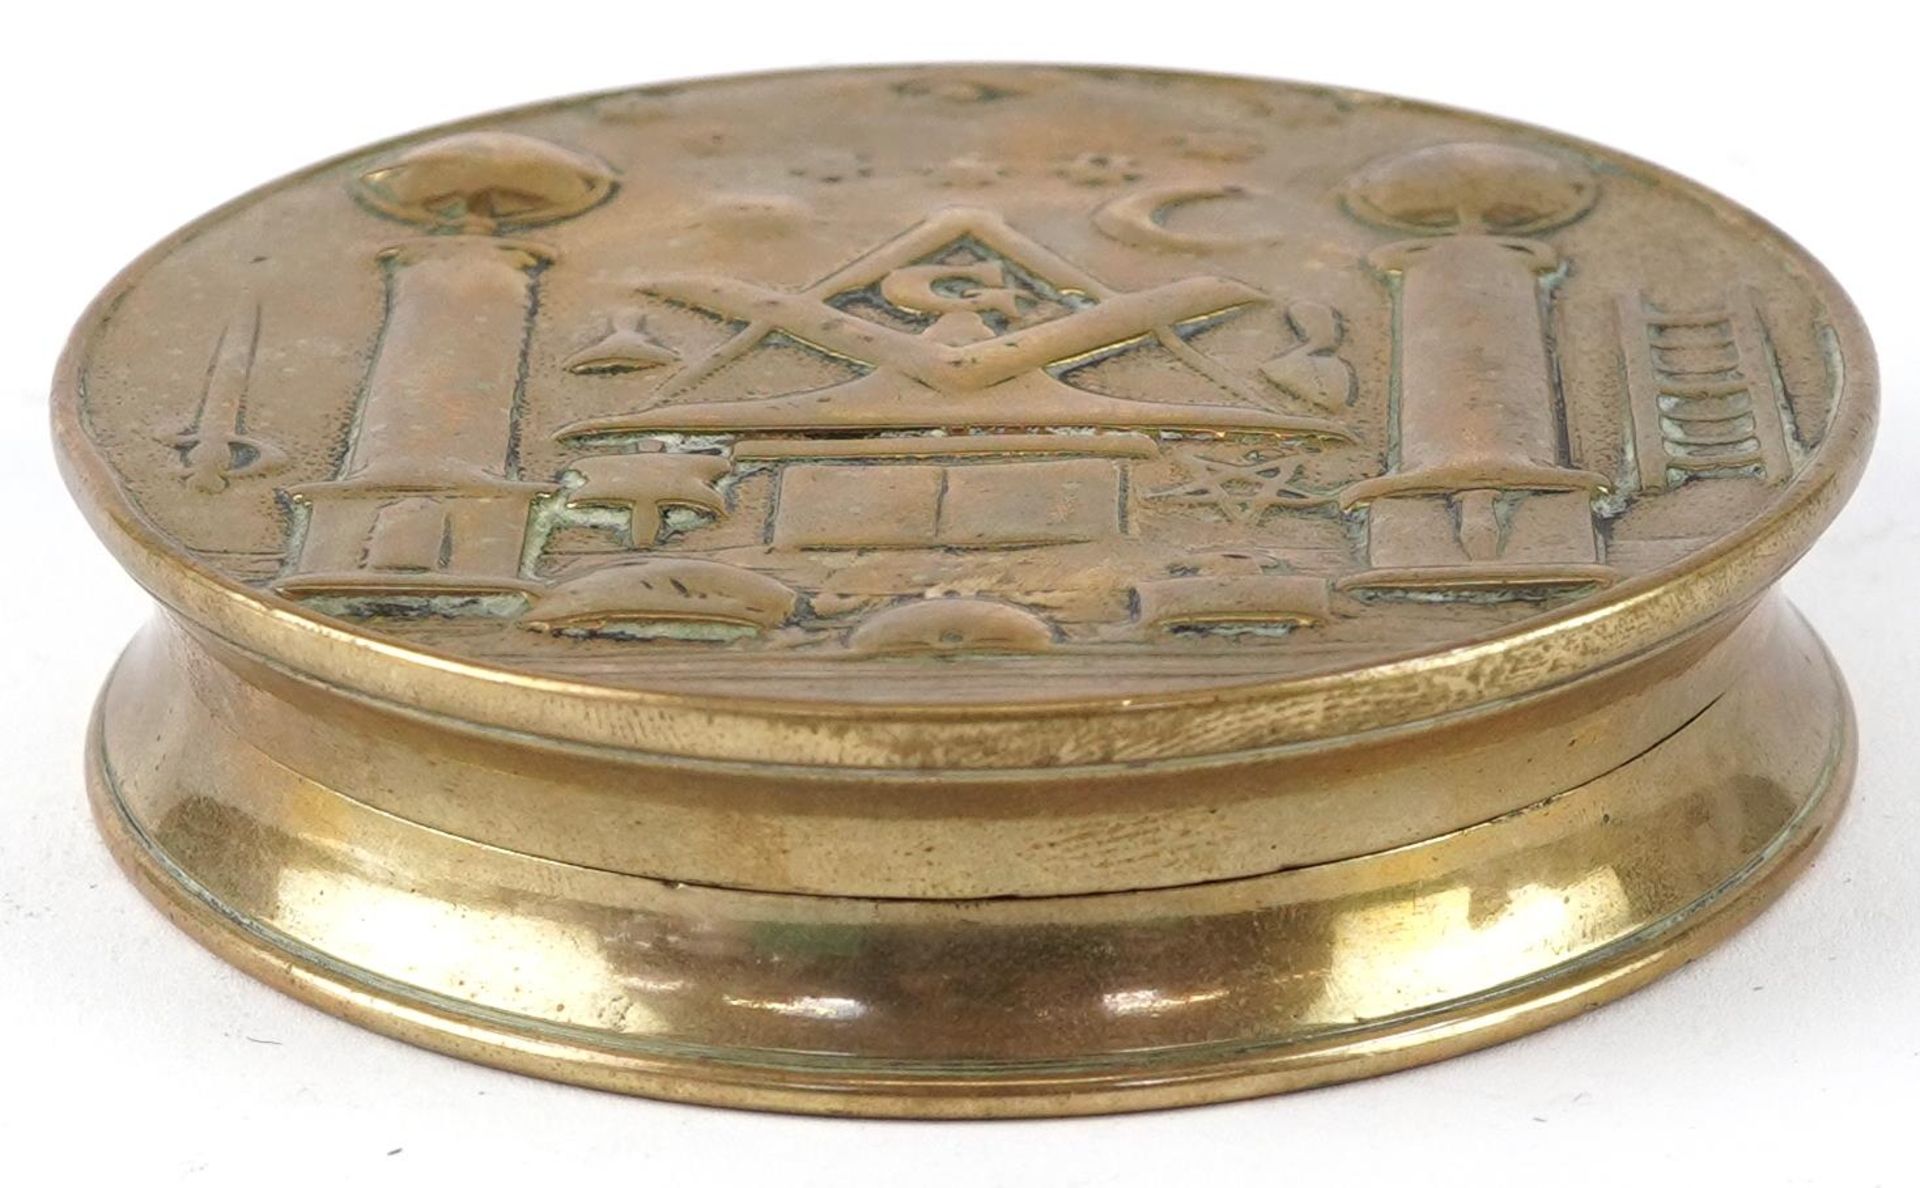 Masonic interest brass tobacco box, 9cm in diameter - Image 2 of 4